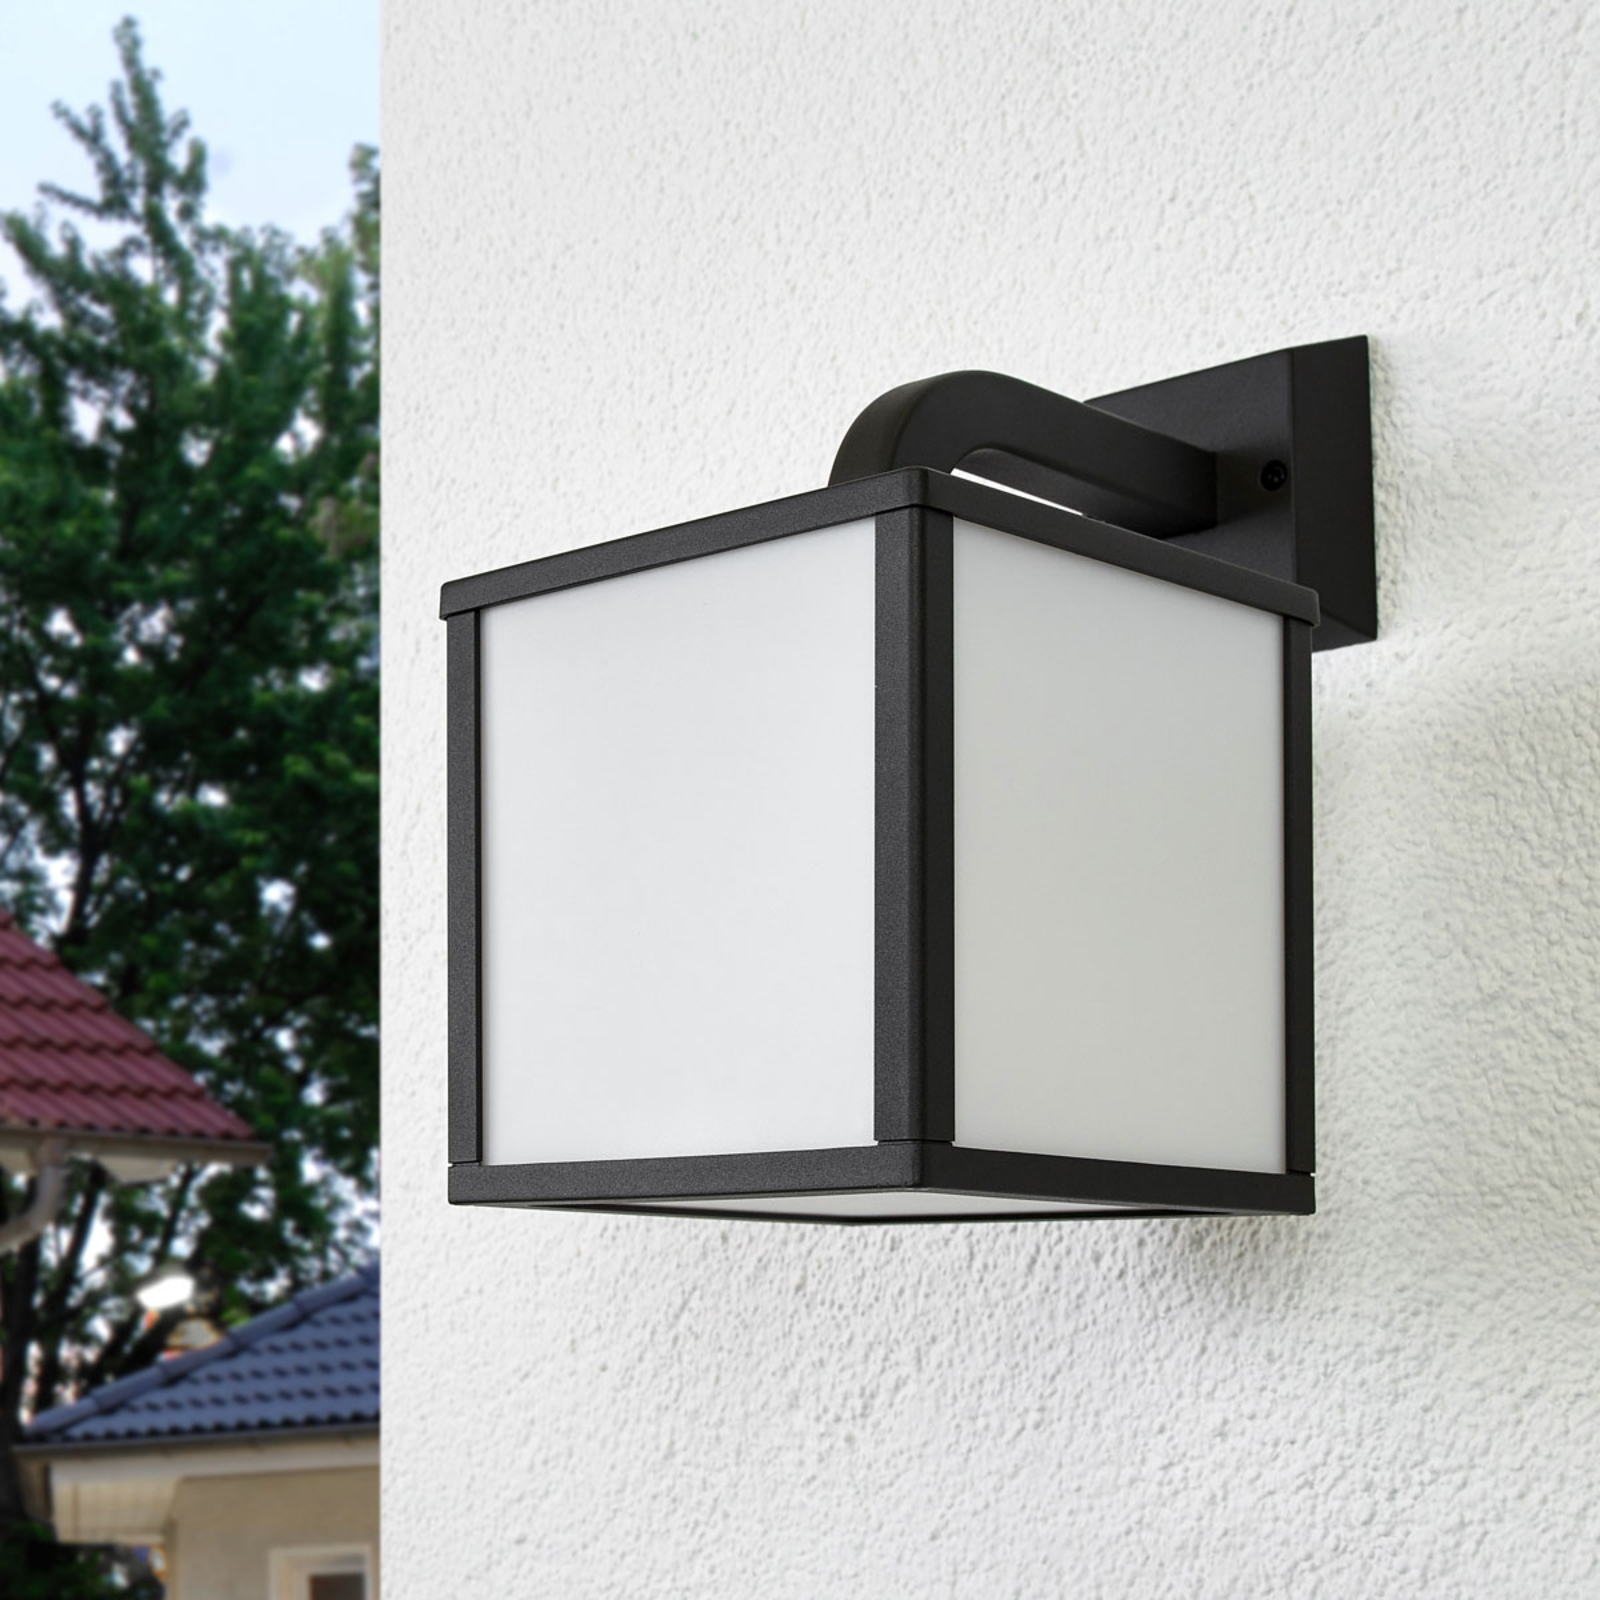 LED outdoor wall light Cubango, one cube lampshade